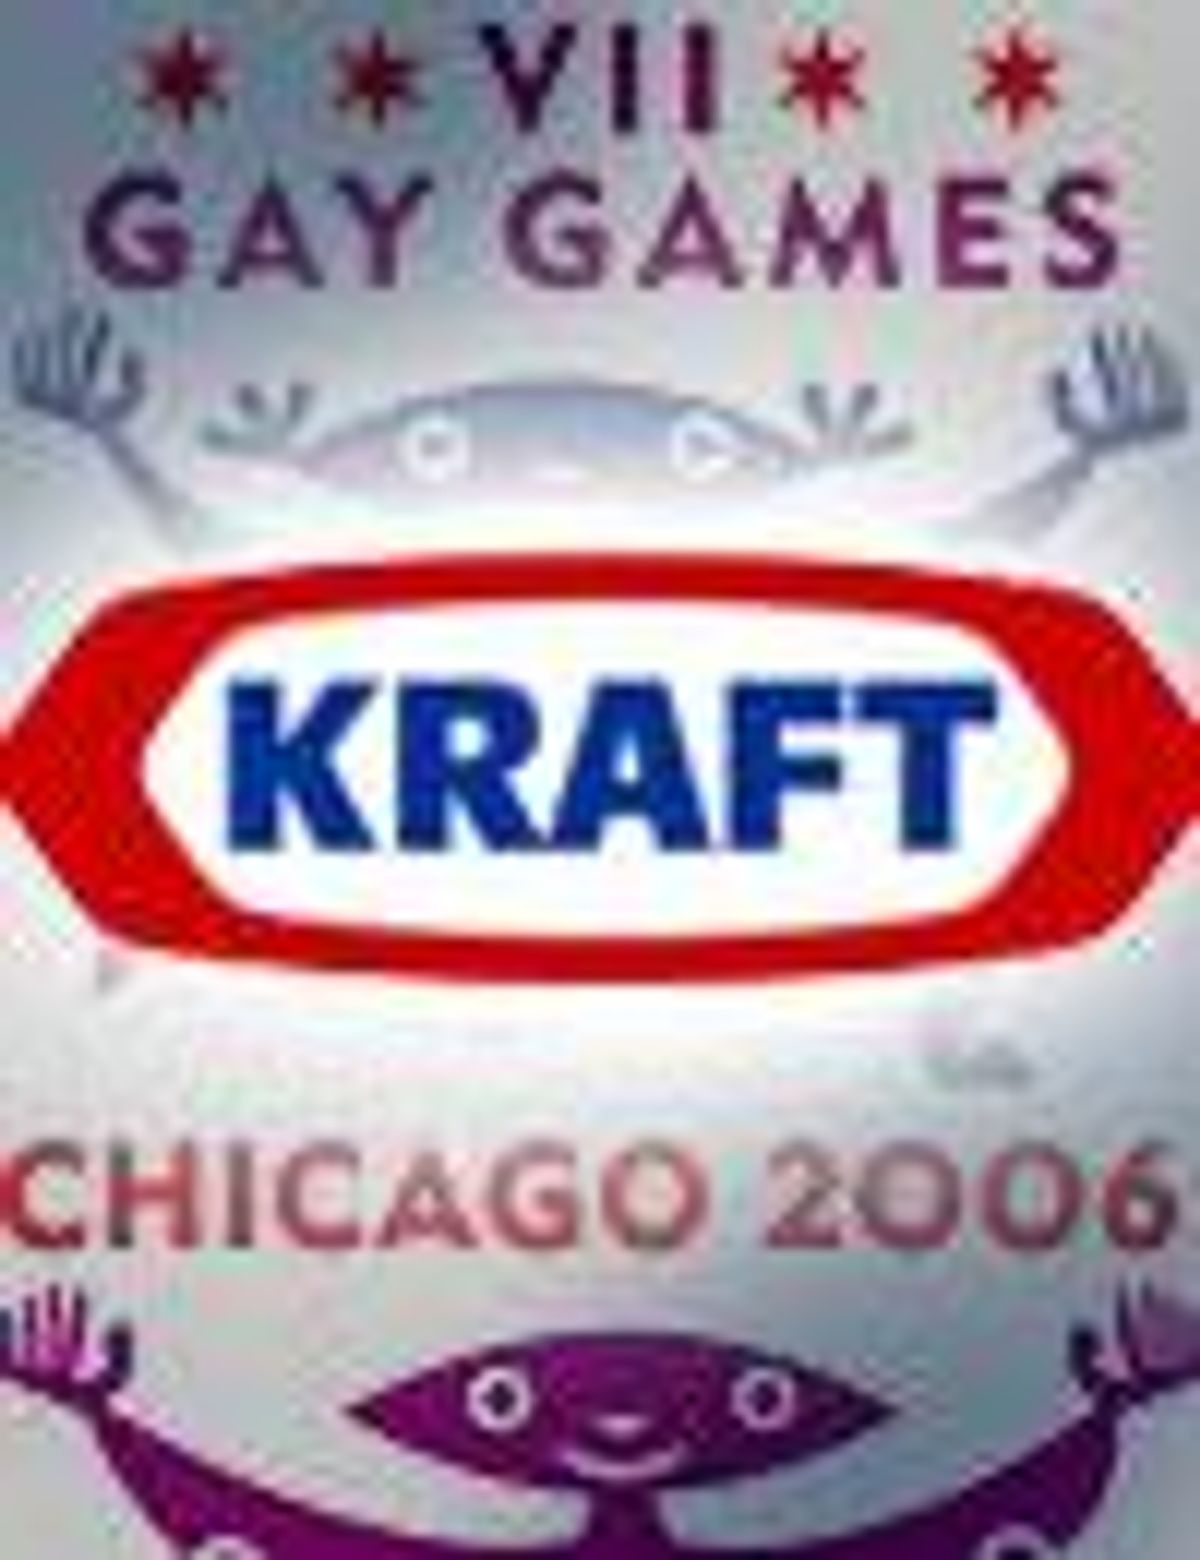 Gay_games_kraft